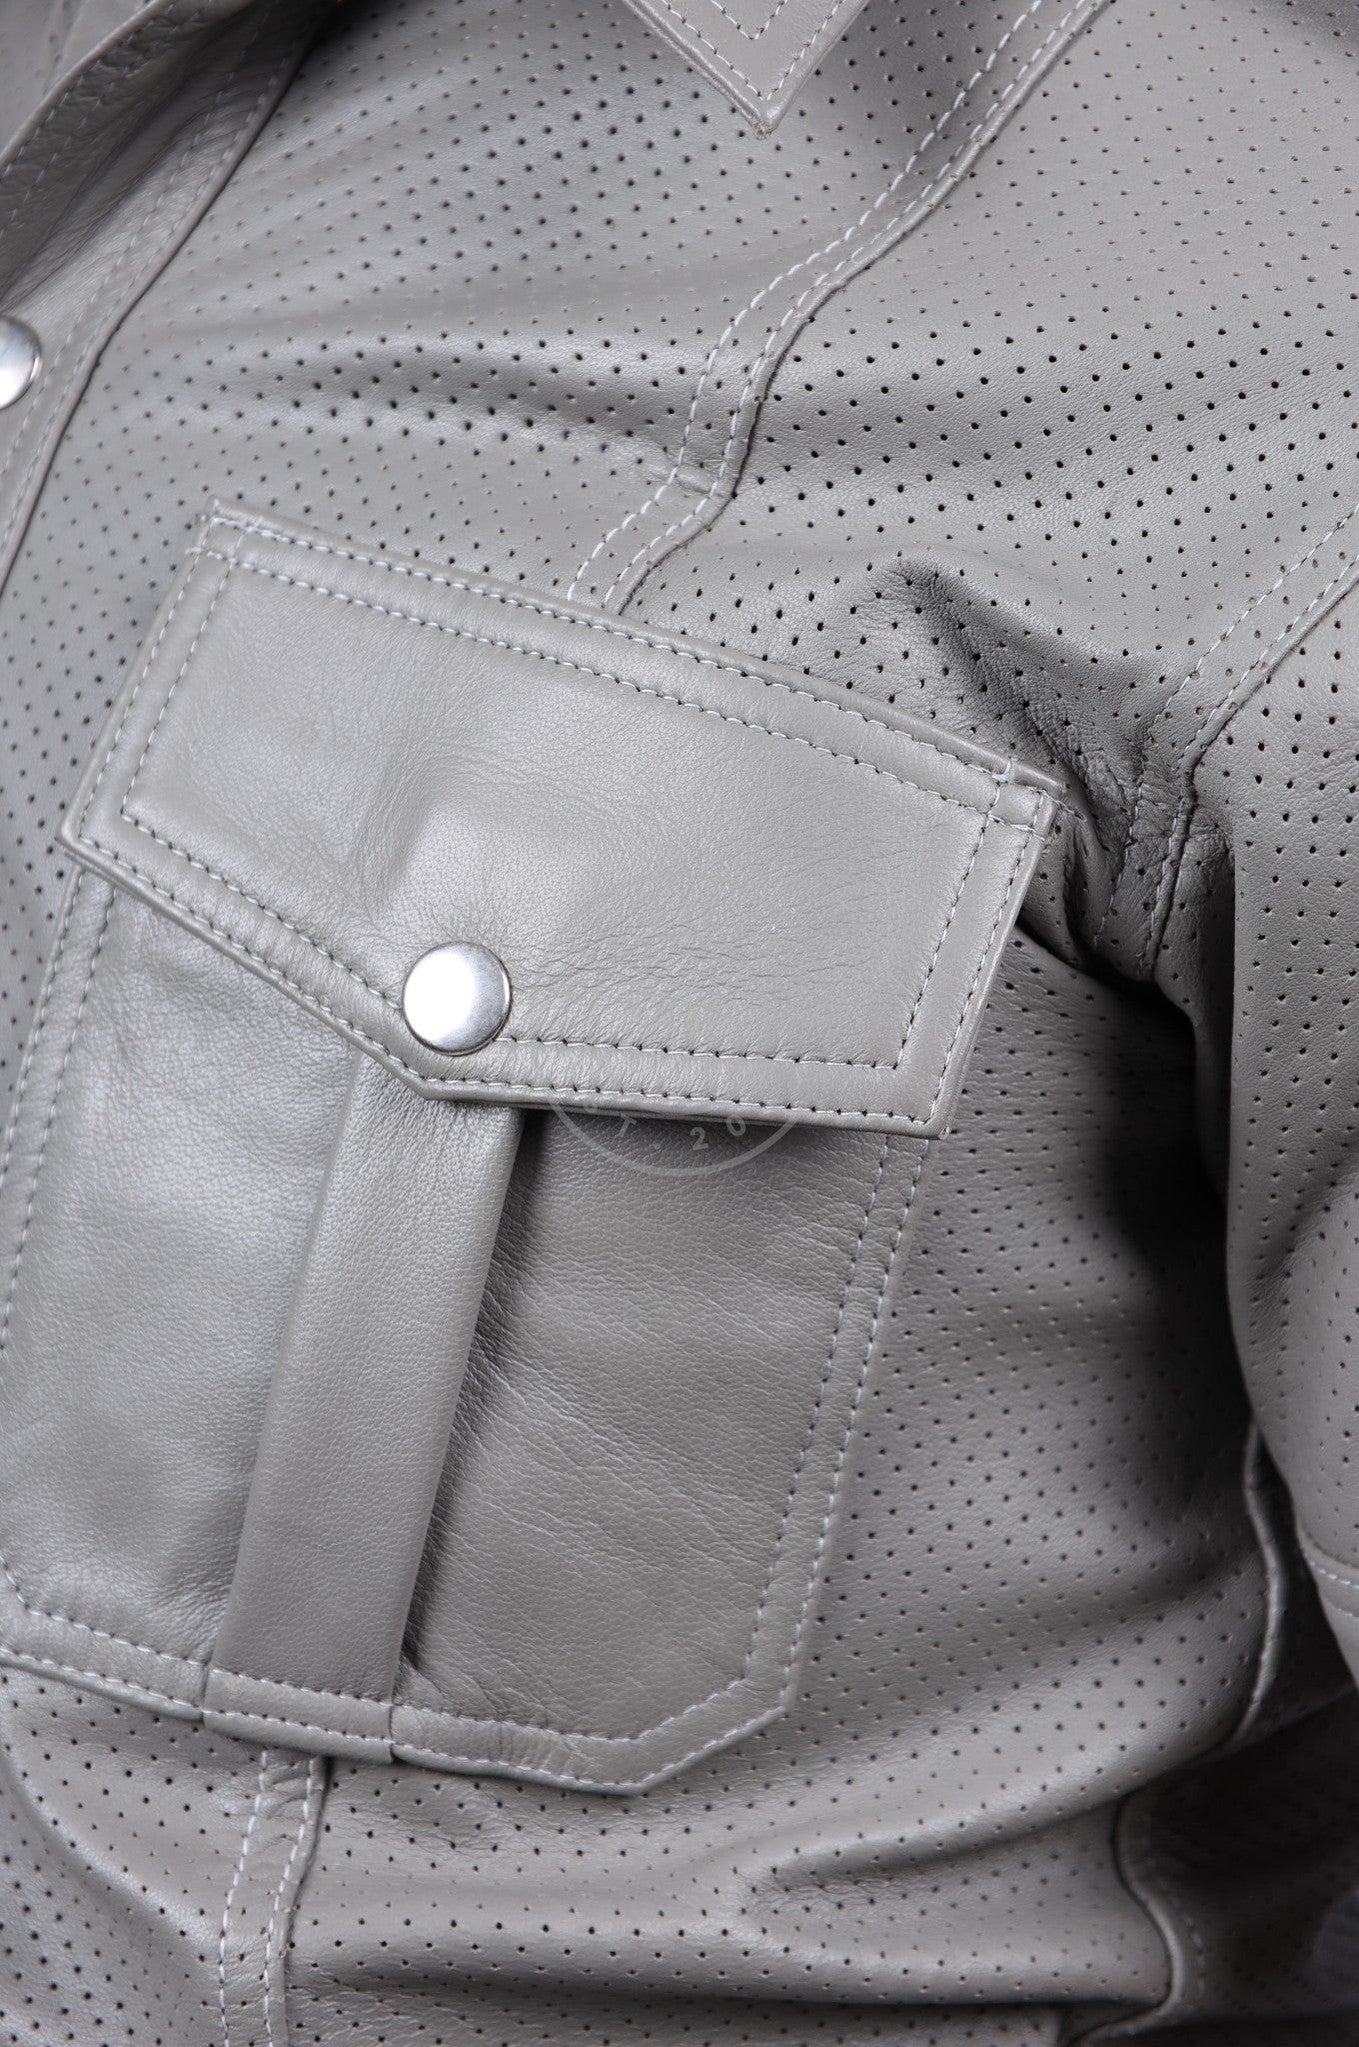 Ash Grey Leather Perforated Shirt at MR. Riegillio